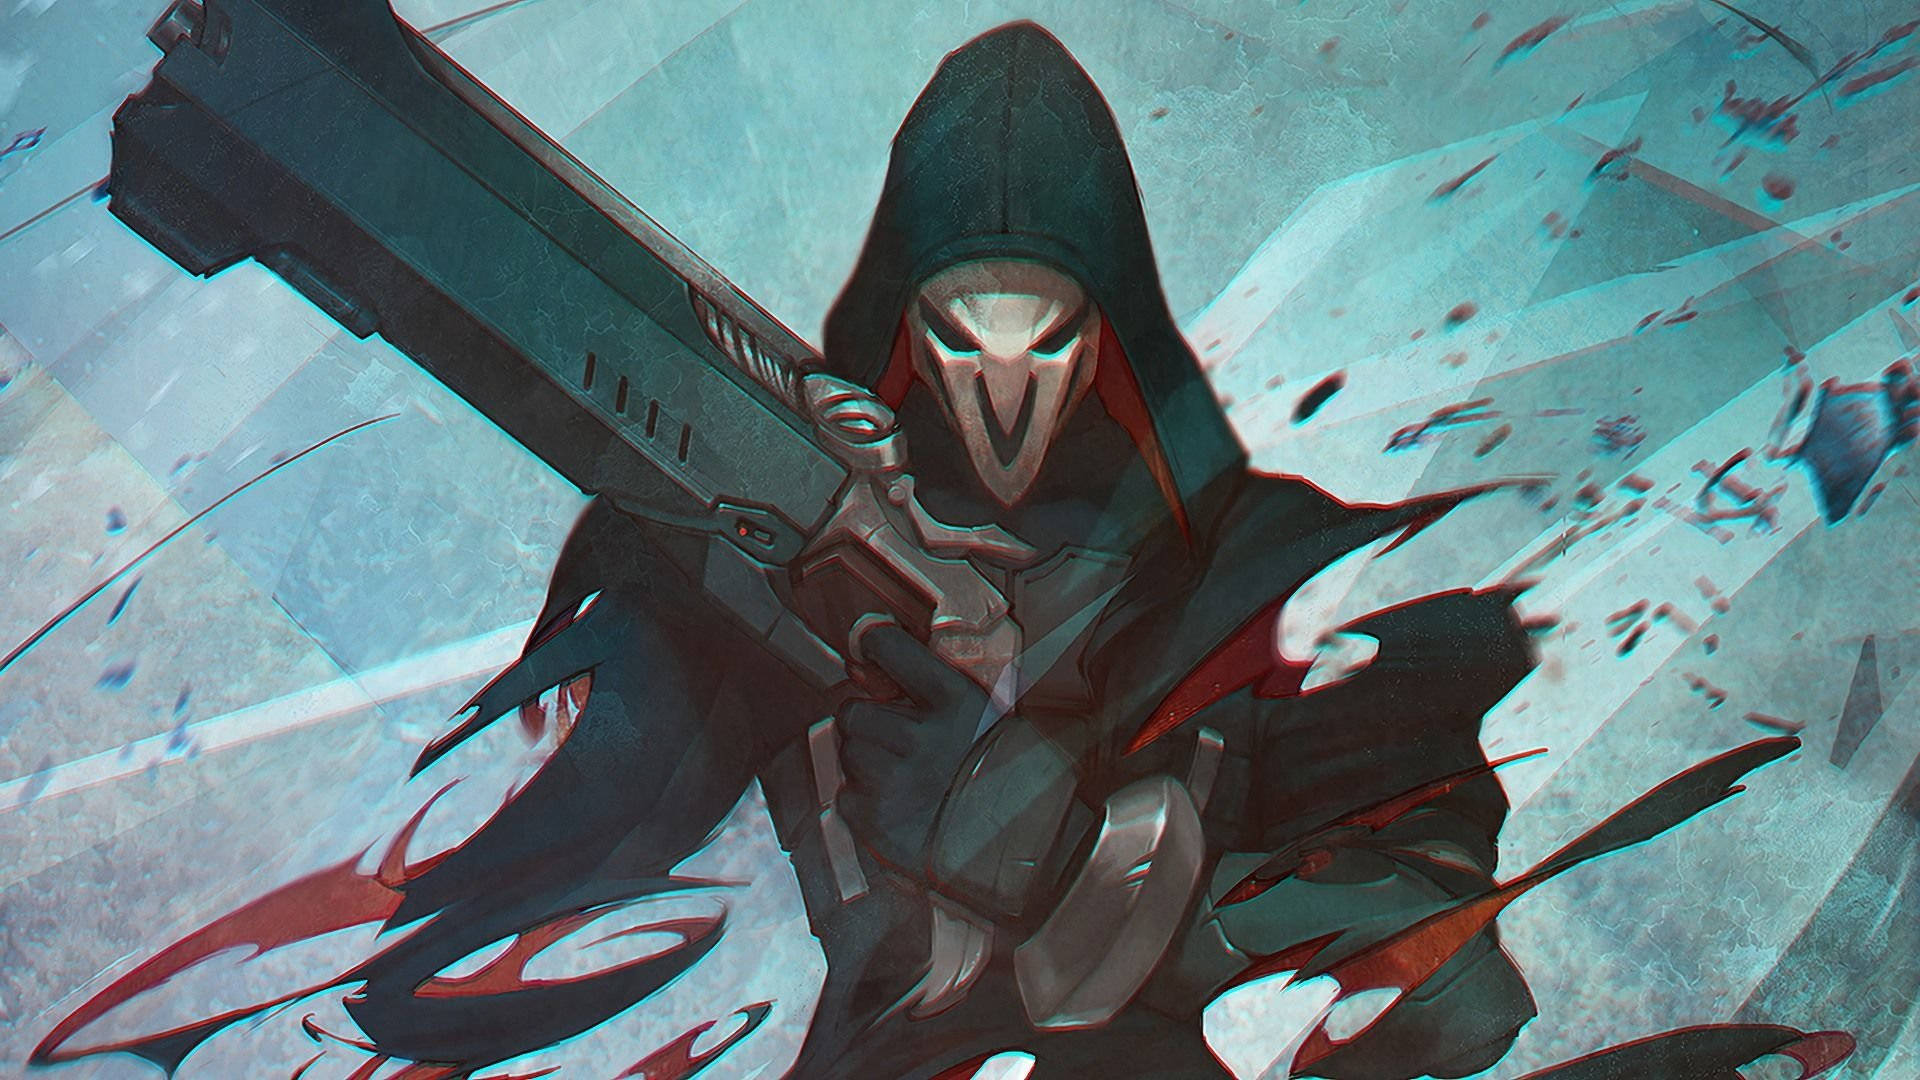 Shroud The Reaper